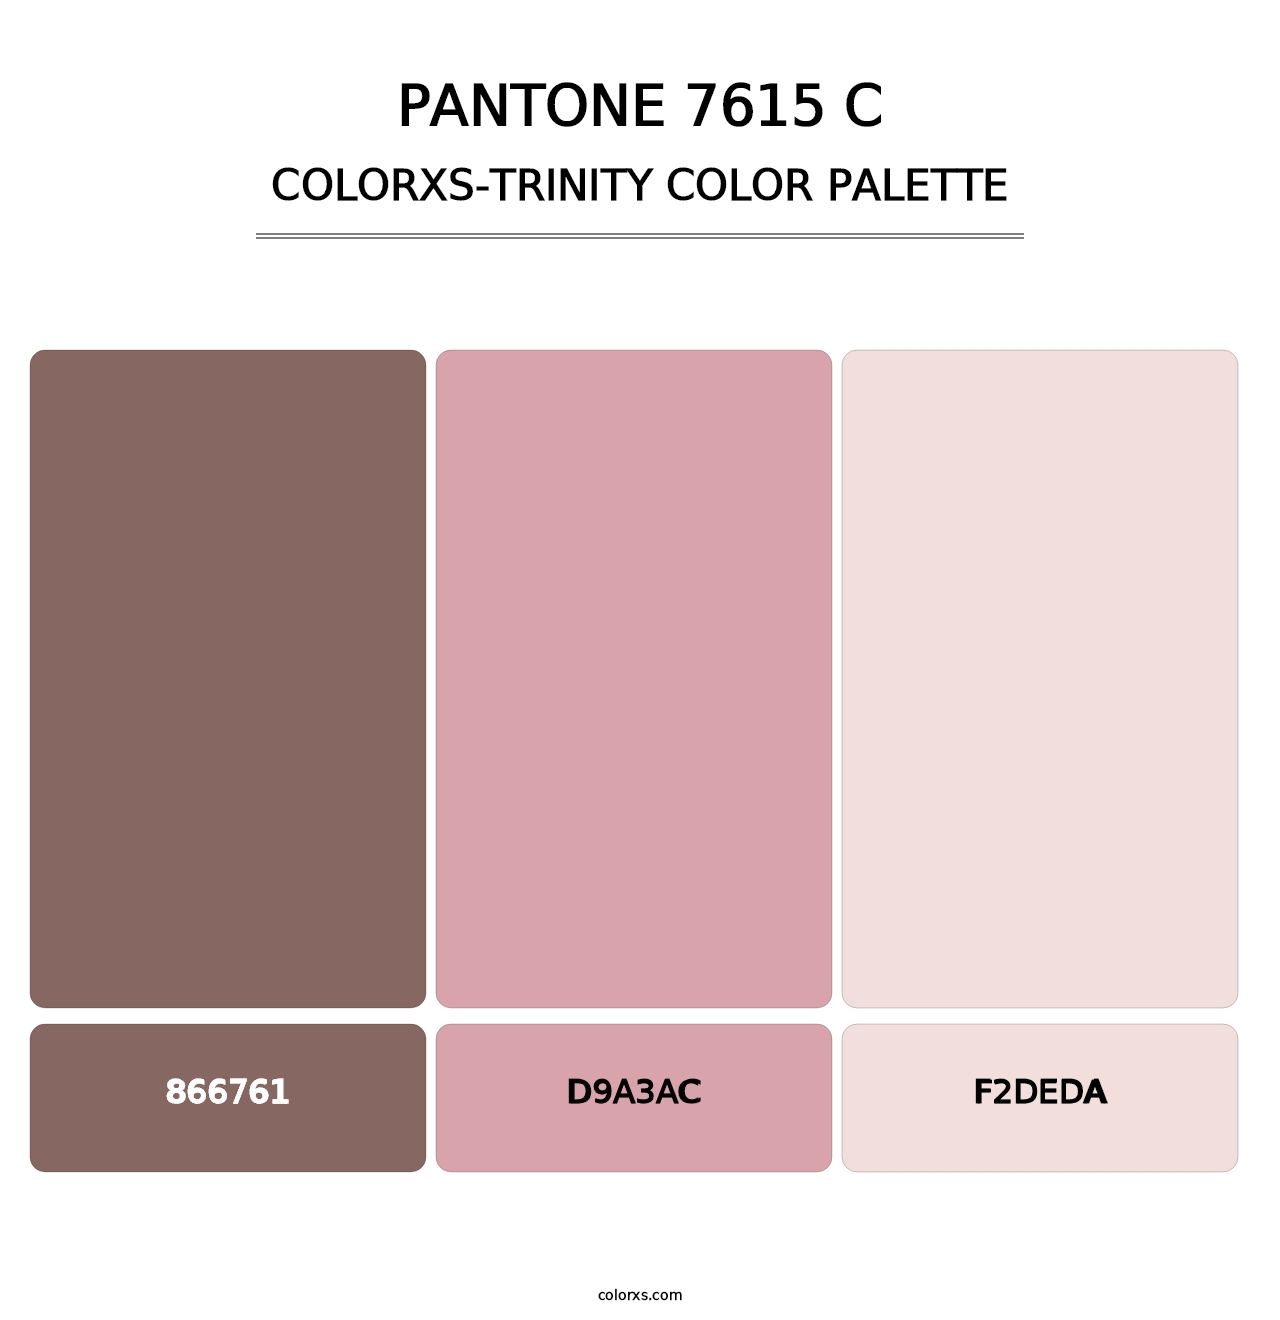 PANTONE 7615 C - Colorxs Trinity Palette